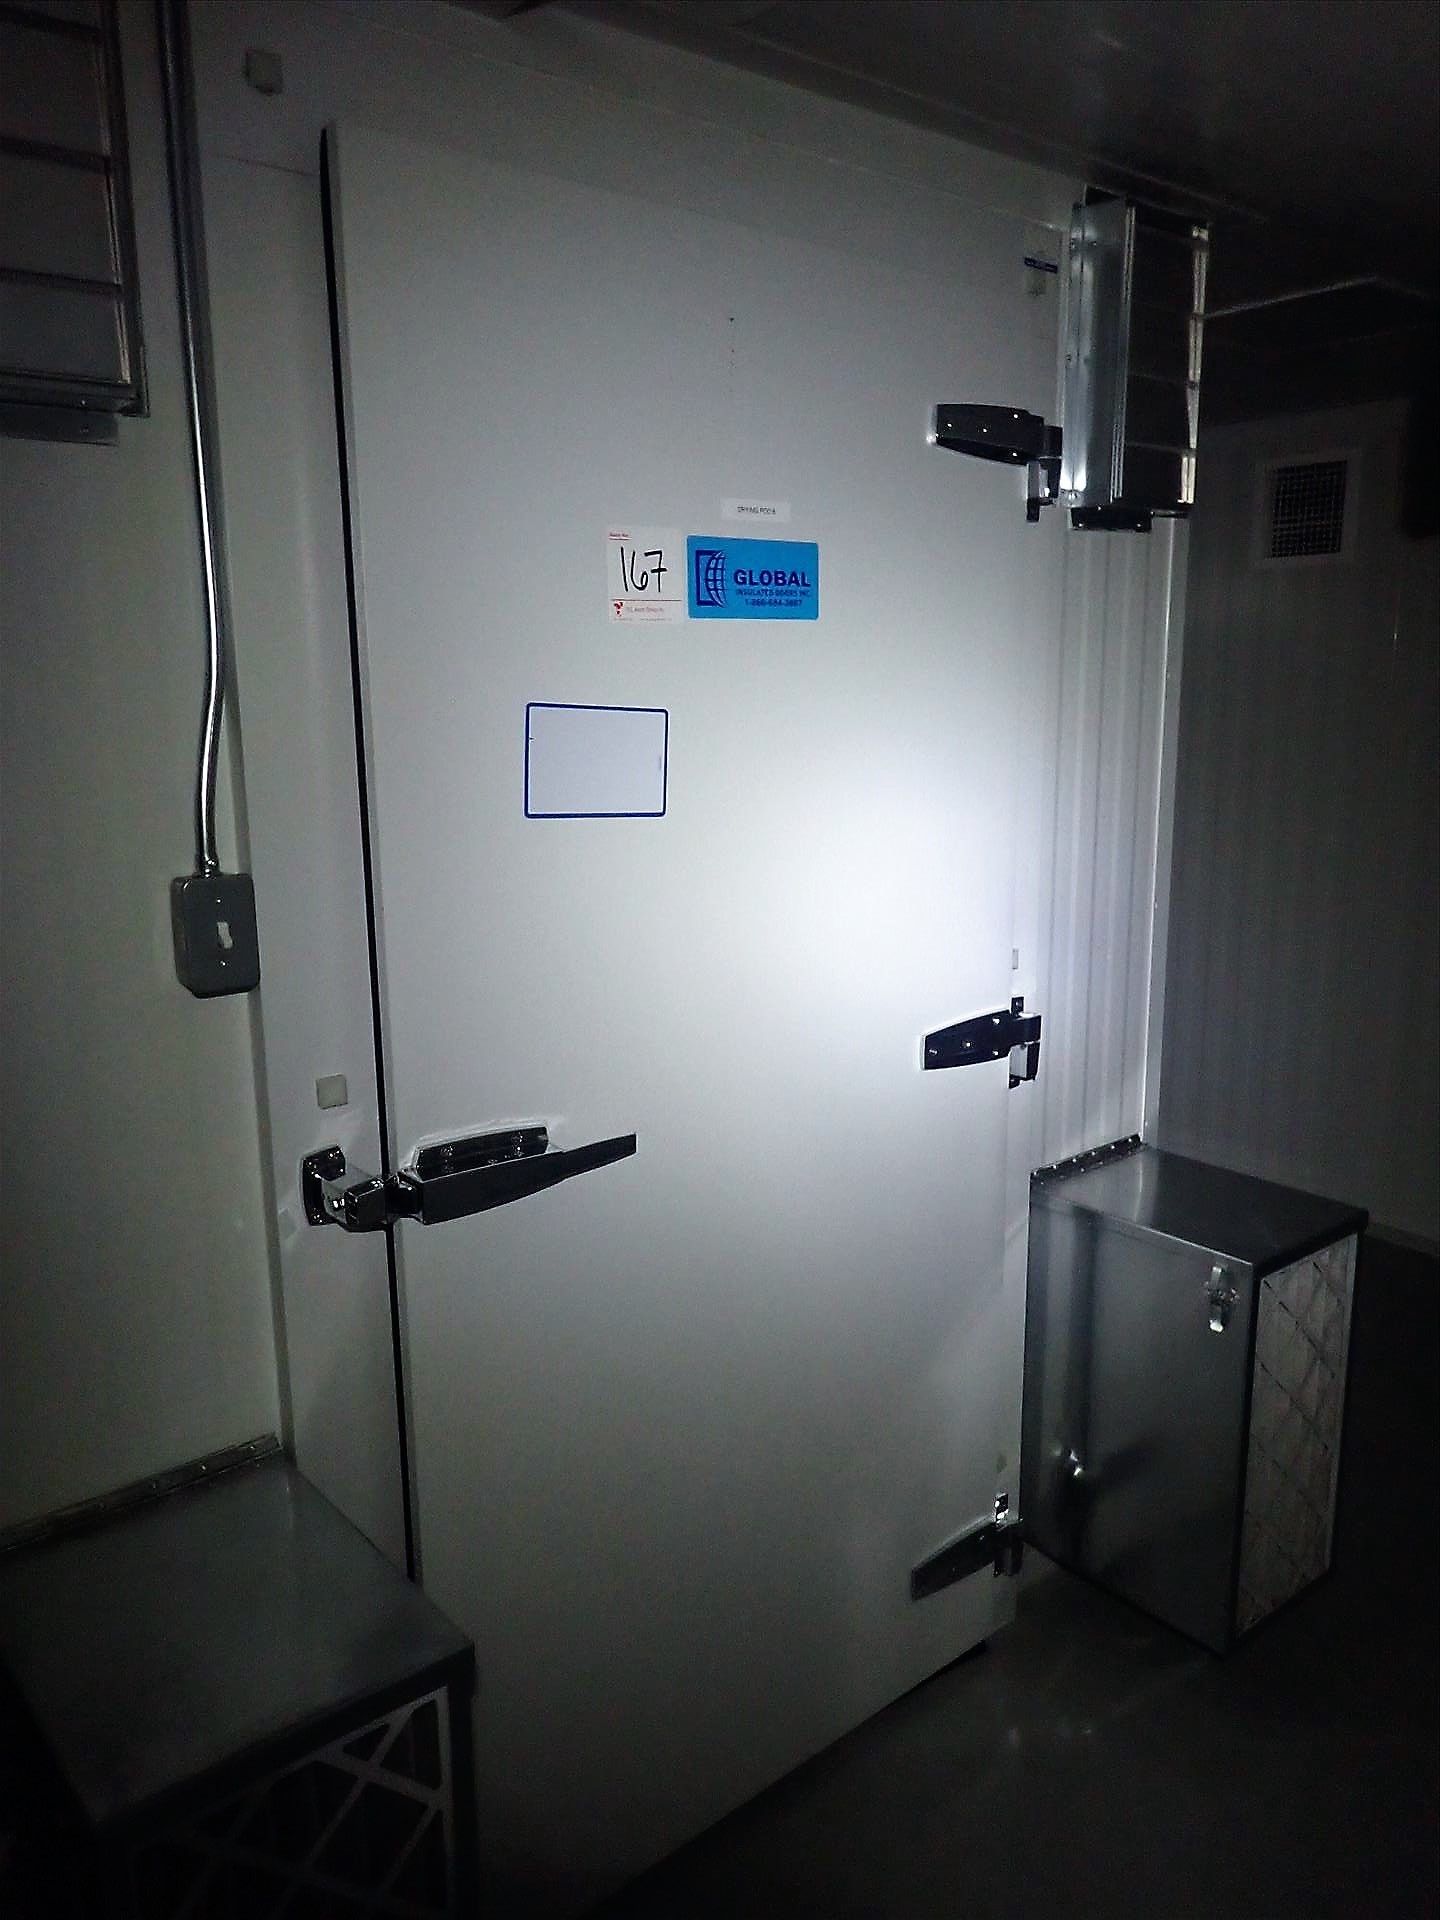 Global insulated door w/ frame, mod. 540TN, 39 in. x 78 in.